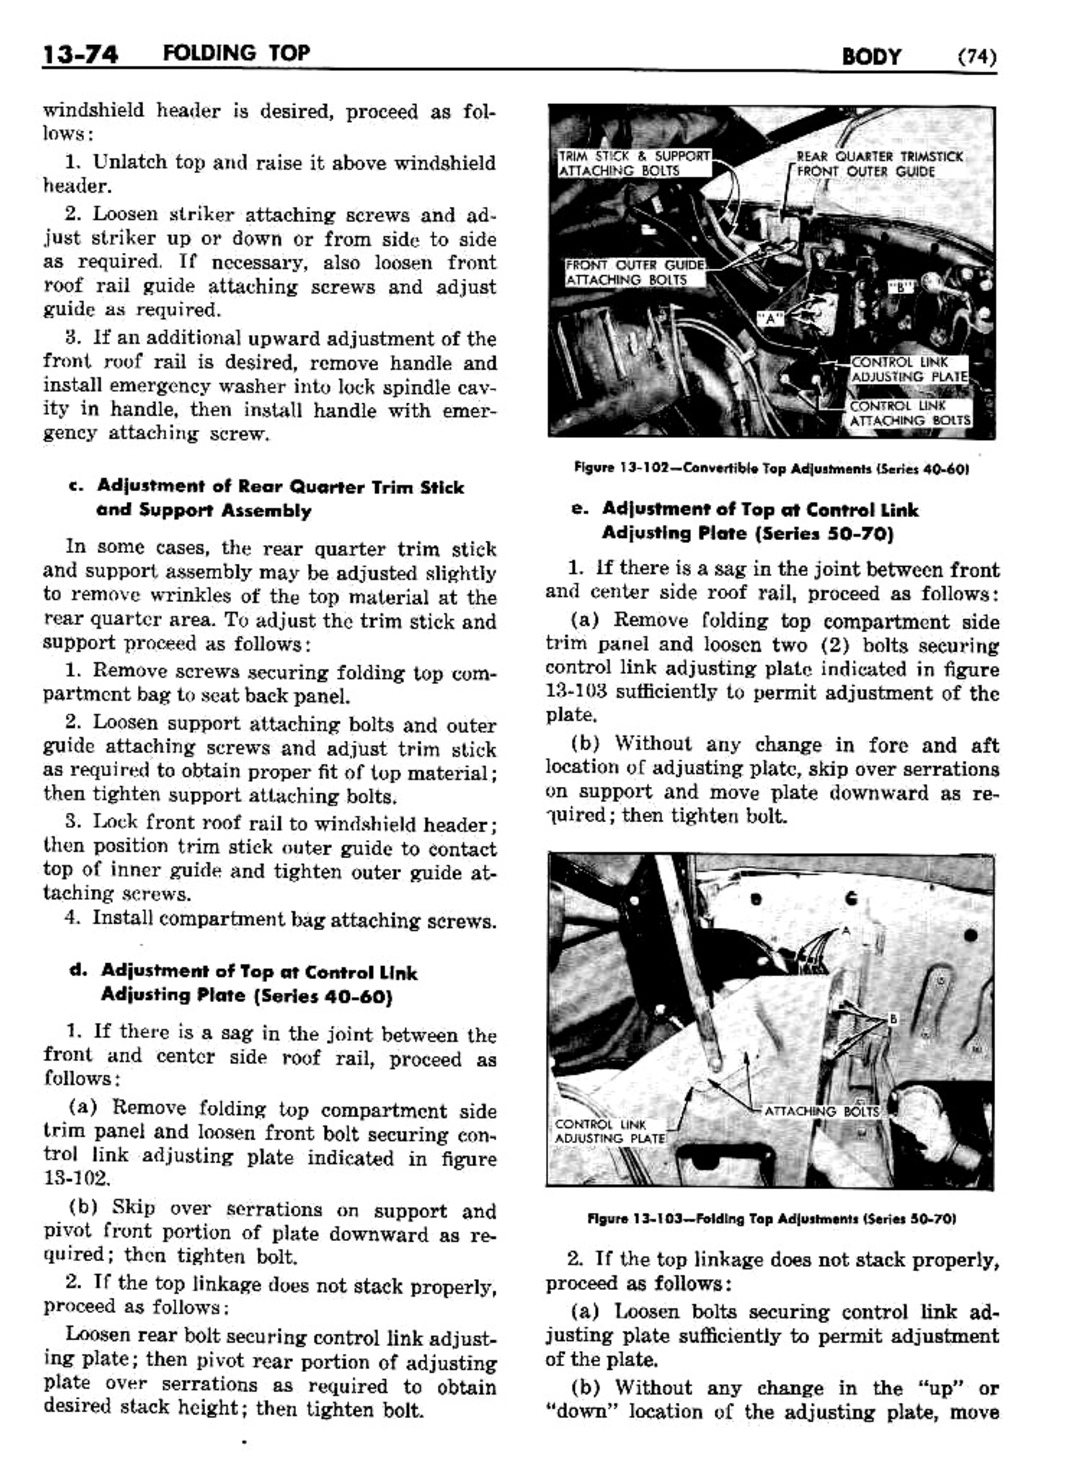 n_1957 Buick Body Service Manual-076-076.jpg